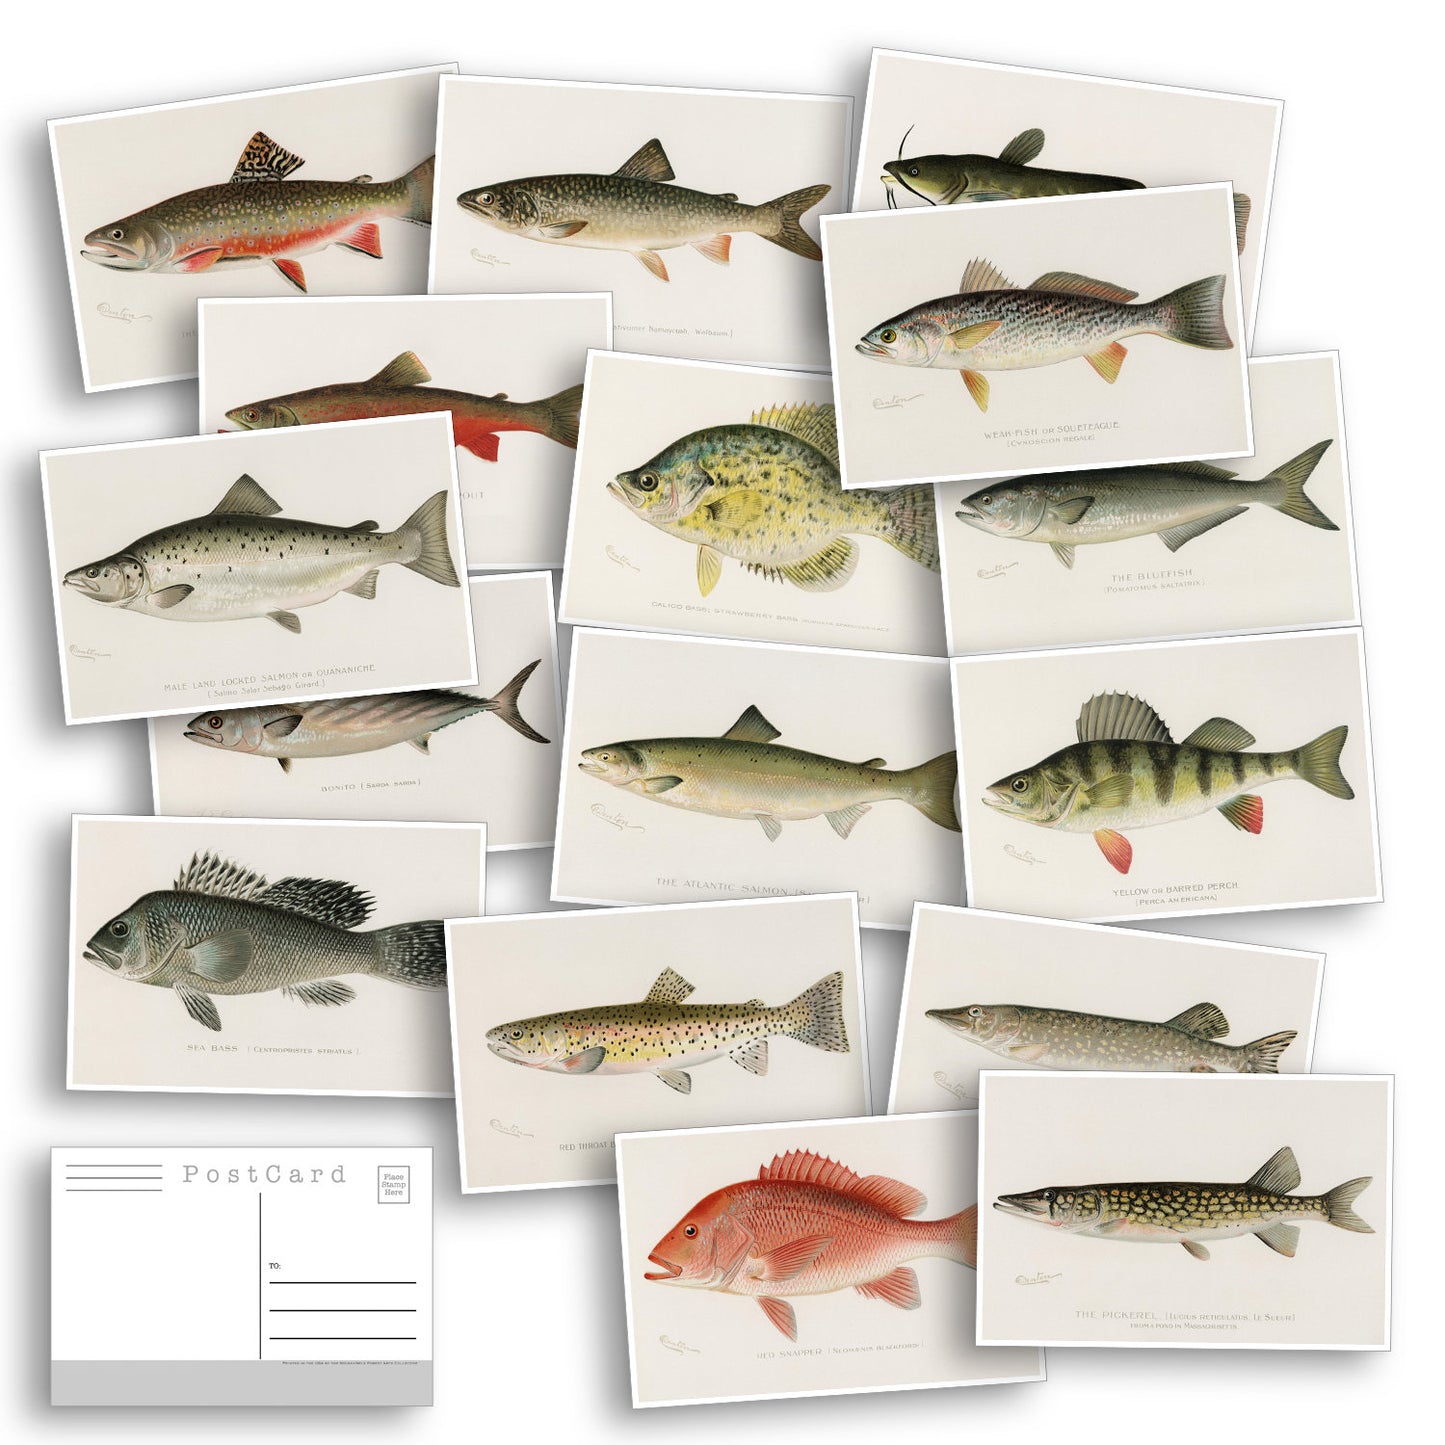 North American Fish Postcard Bulk Pack Of 16 - Fishing - Outdoors - Nature - Post Cards - Wall Art - Scrapbook